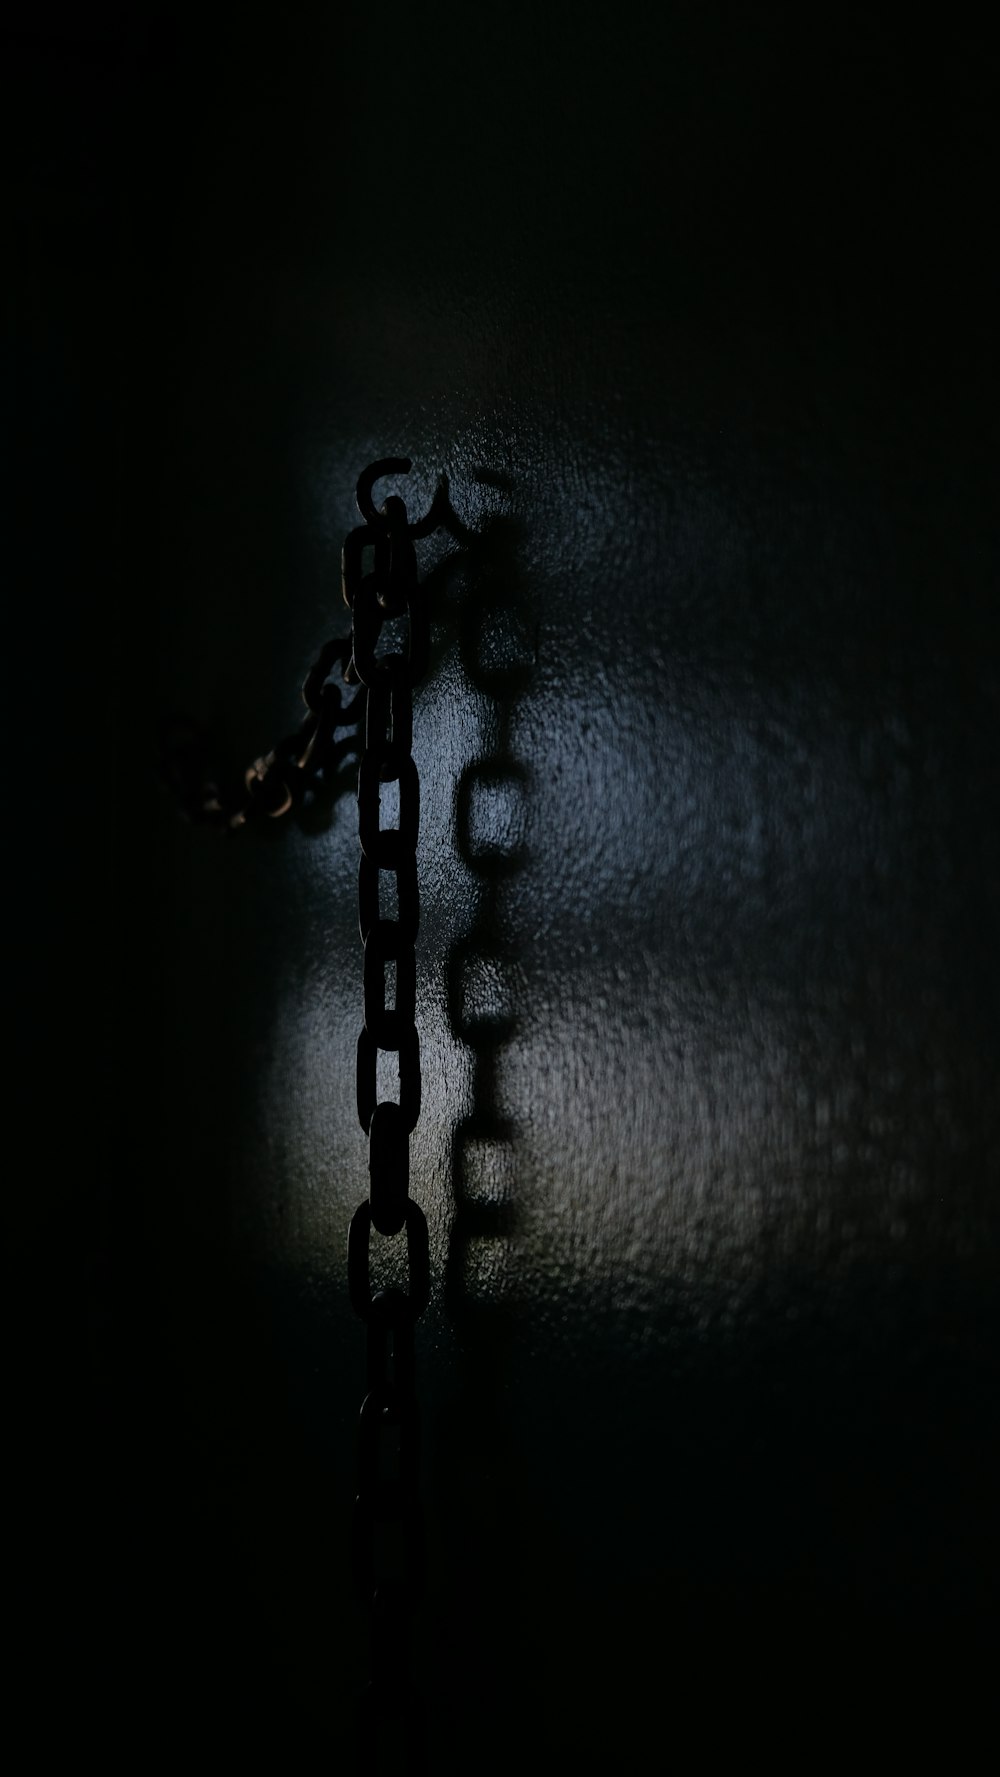 gray metal chain link